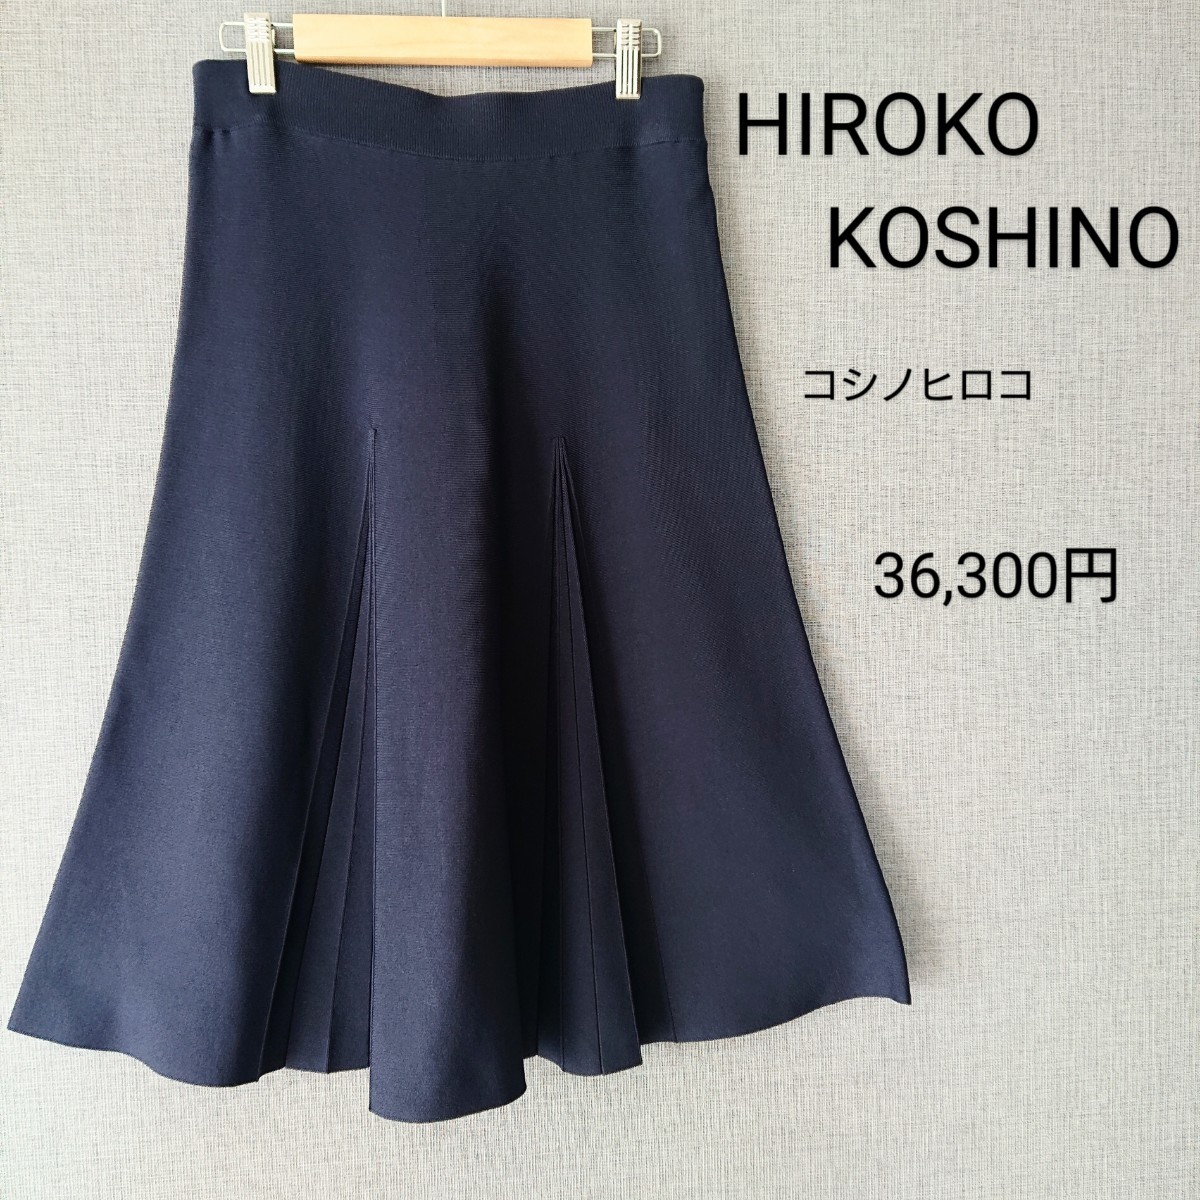 HIROKO KOSHINO ヒロココシノ スカート ネイビー 新品